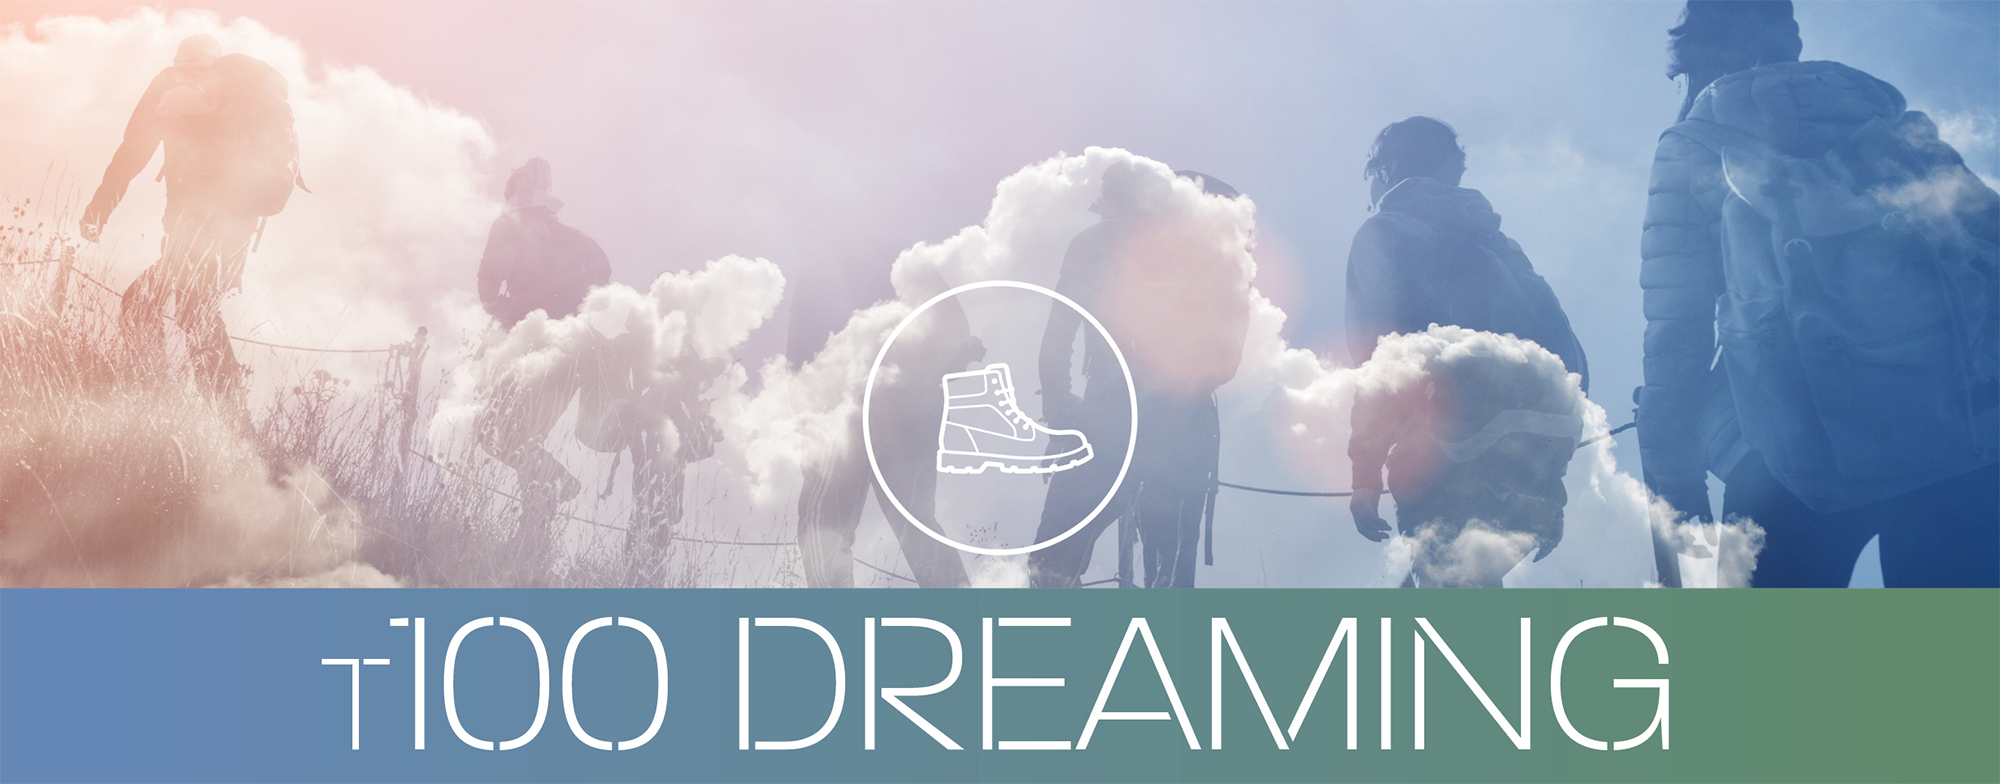 T100 Dreaming header image